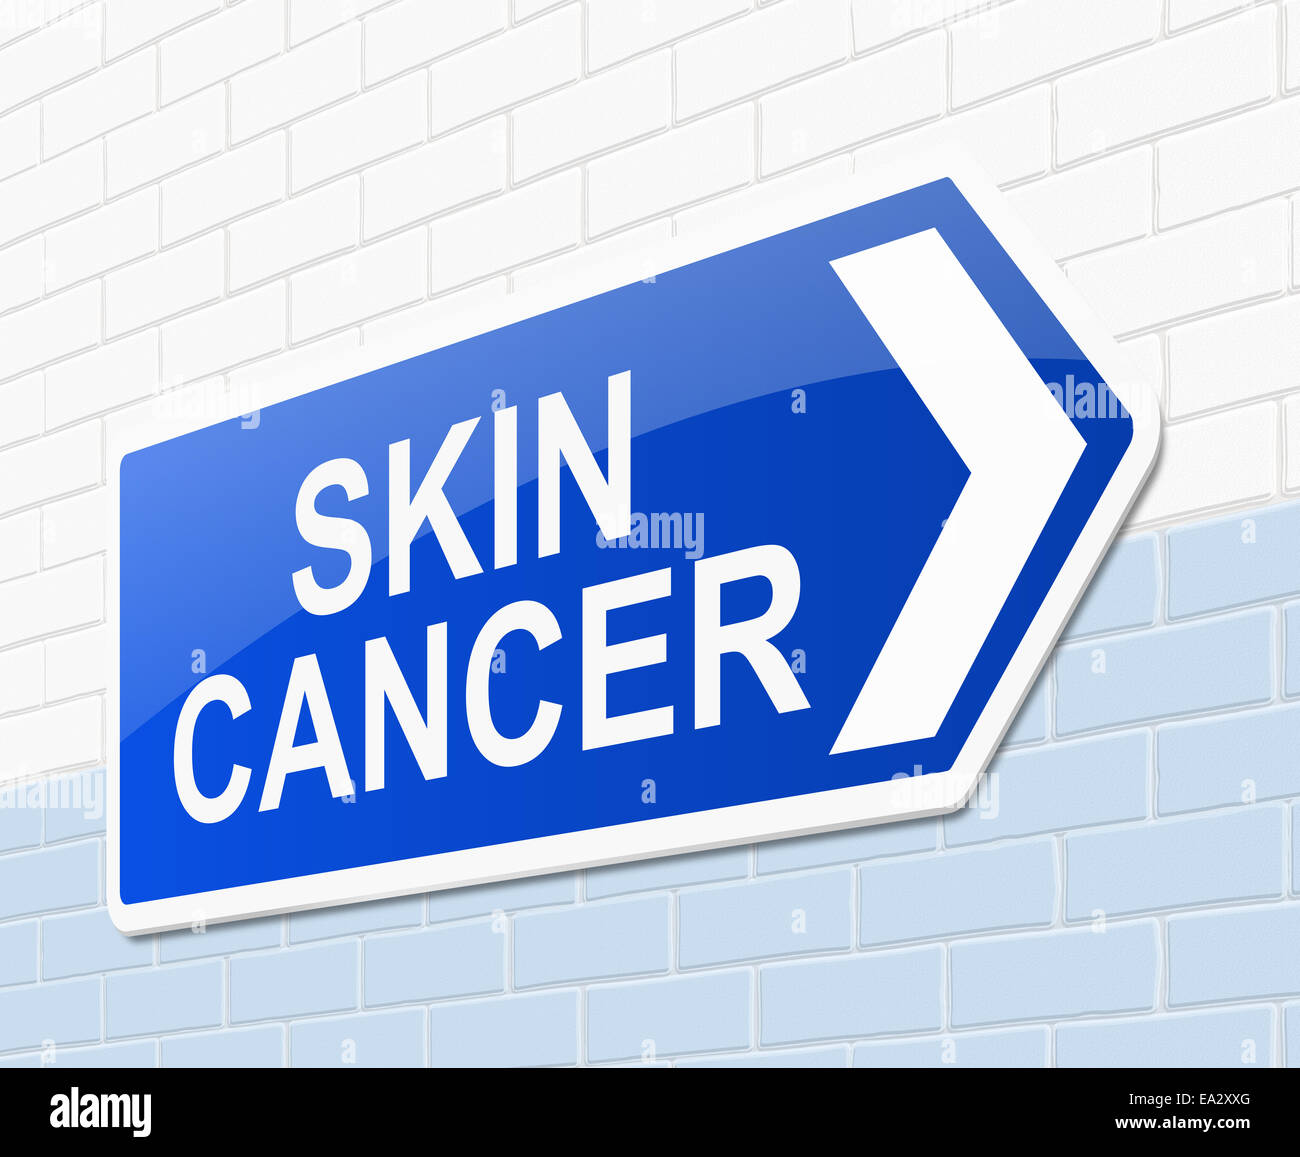 Skin cancer concept. Stock Photo